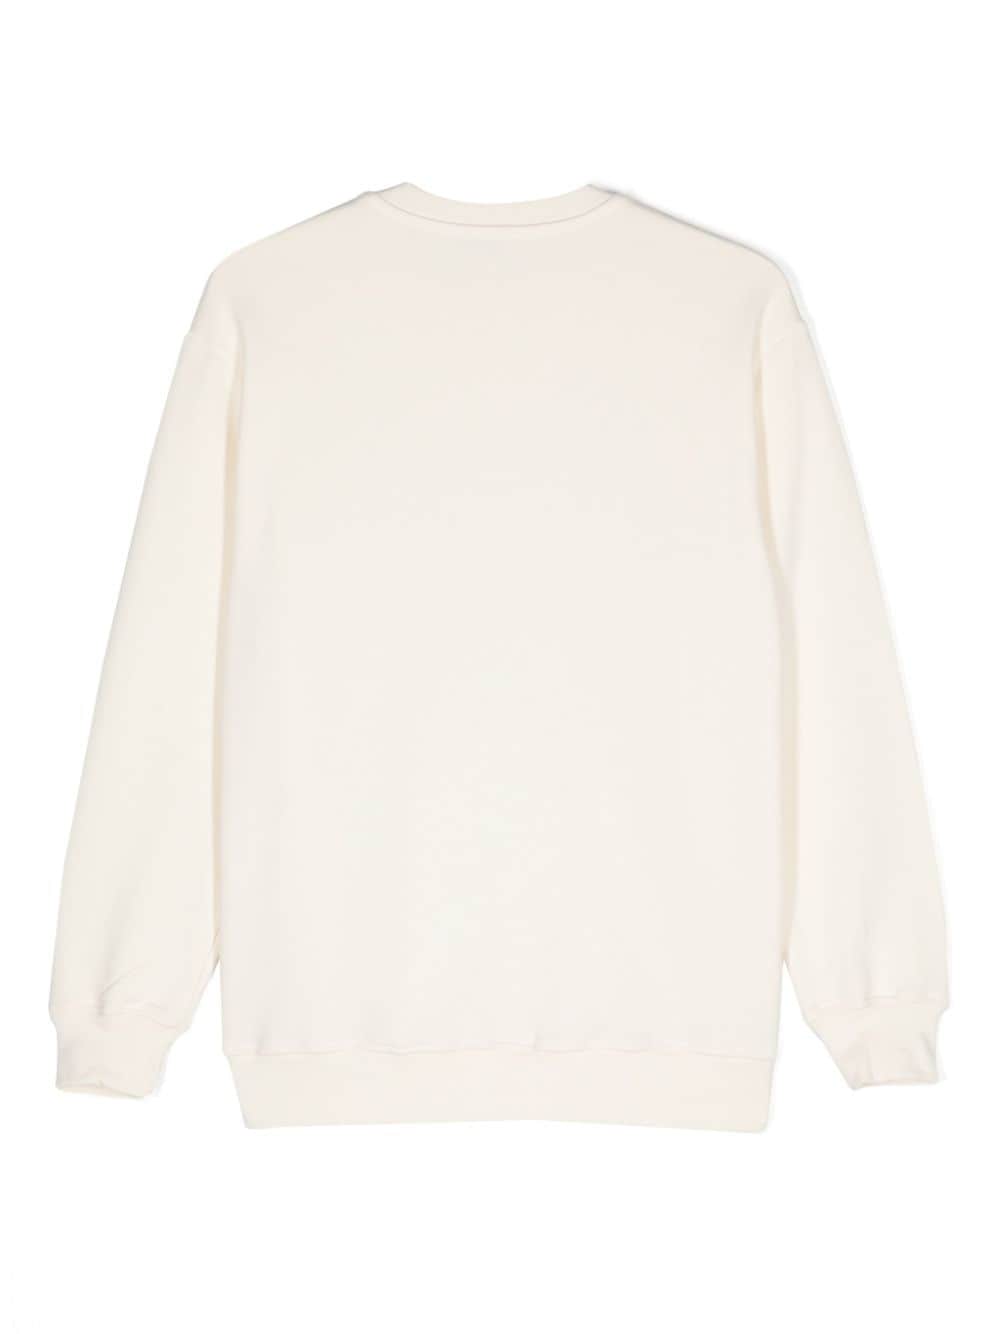 Cream cotton sweatshirt for boys